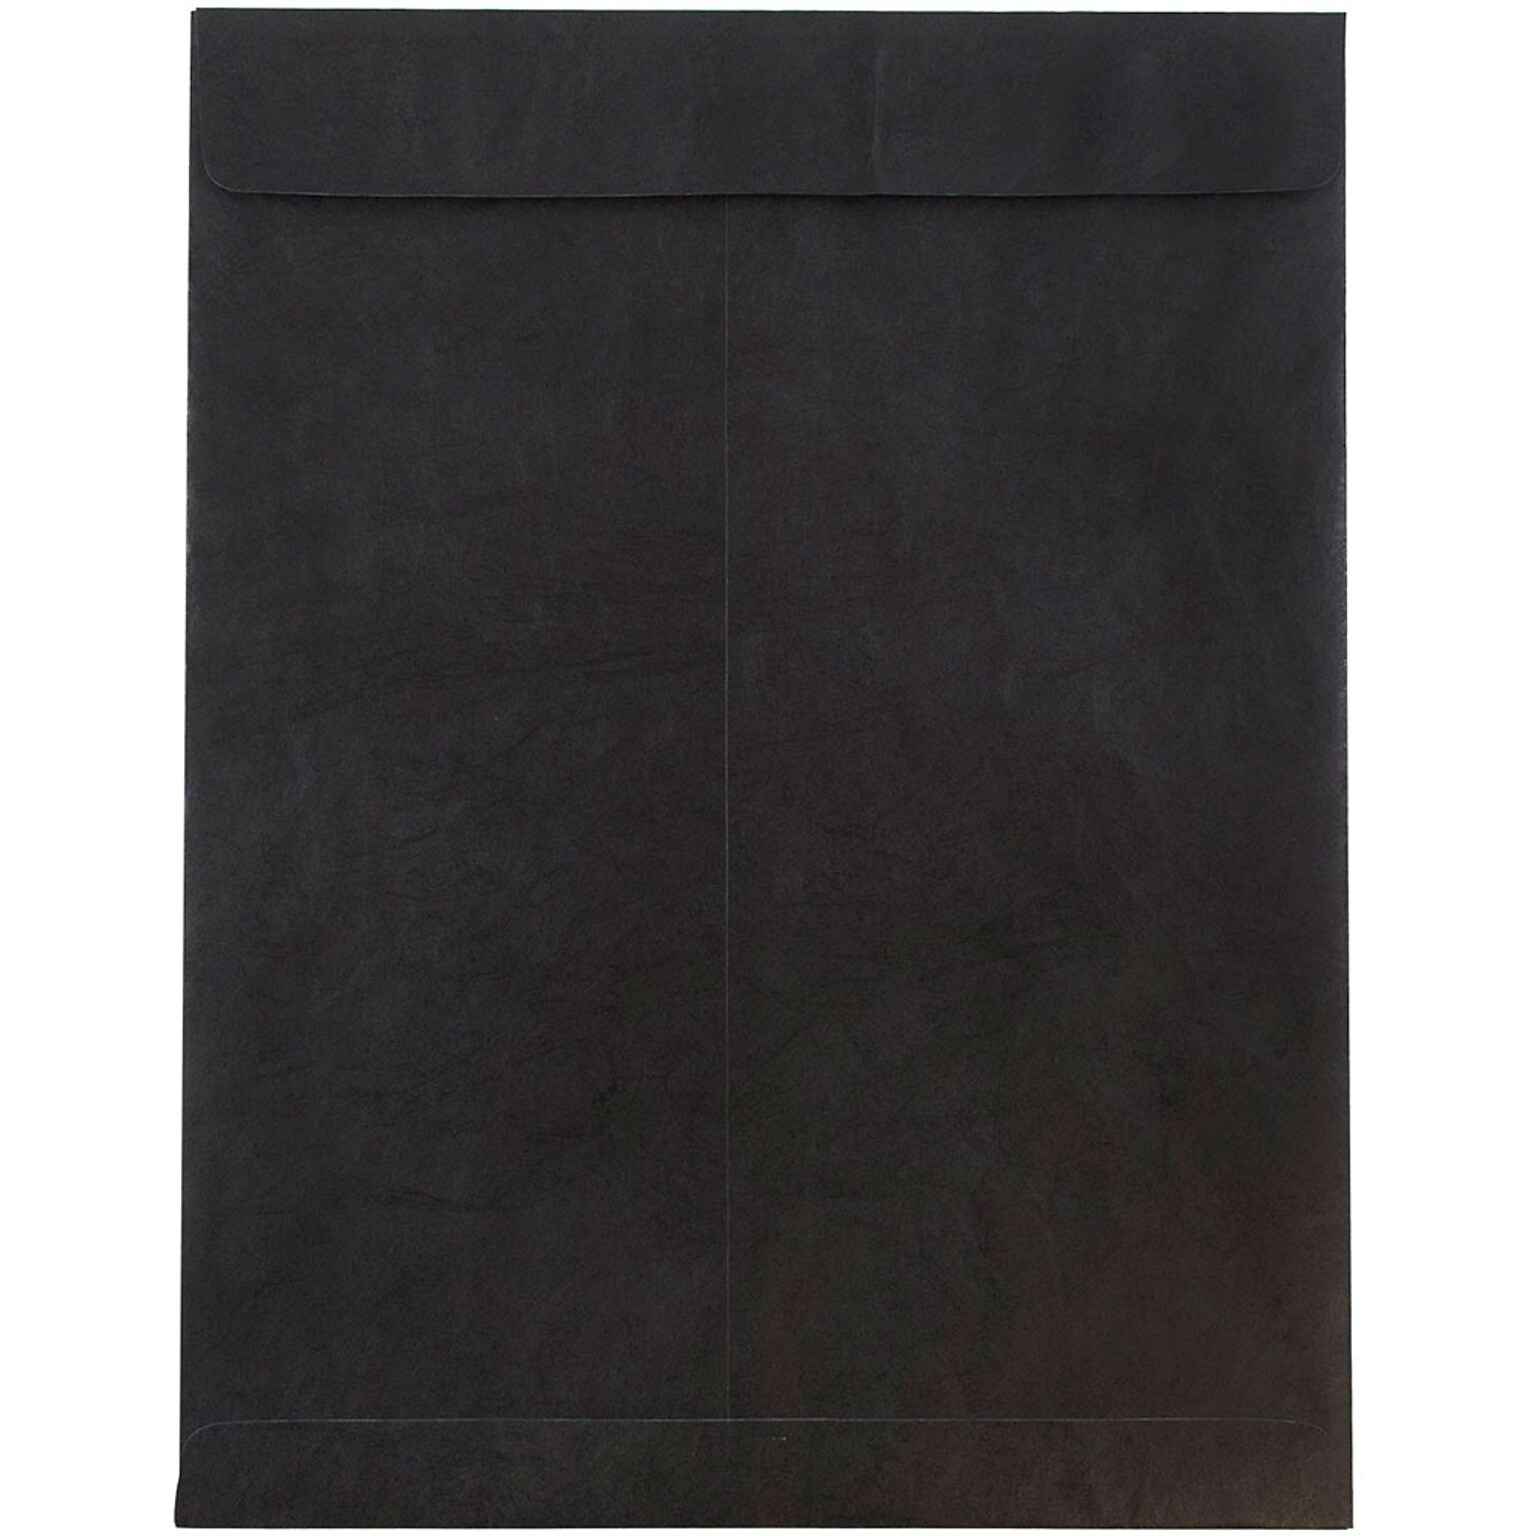 JAM Paper 10 x 13 Tear-Proof Open End Catalog Envelopes, Black, 25/Pack (V021376)